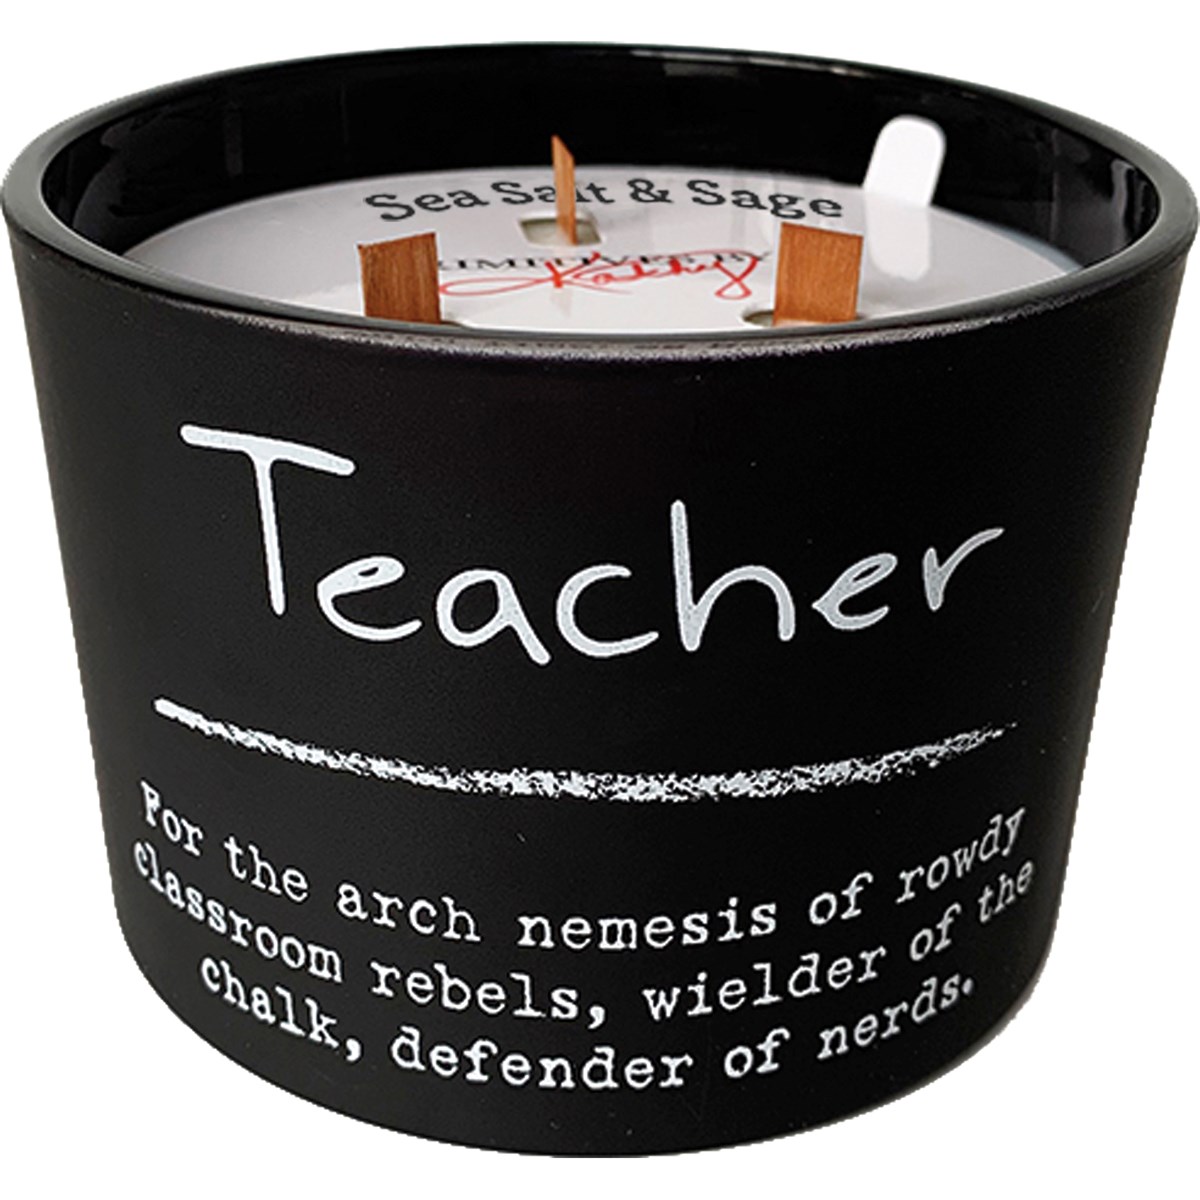 Teacher Candle - Soy Wax, Glass, Wood